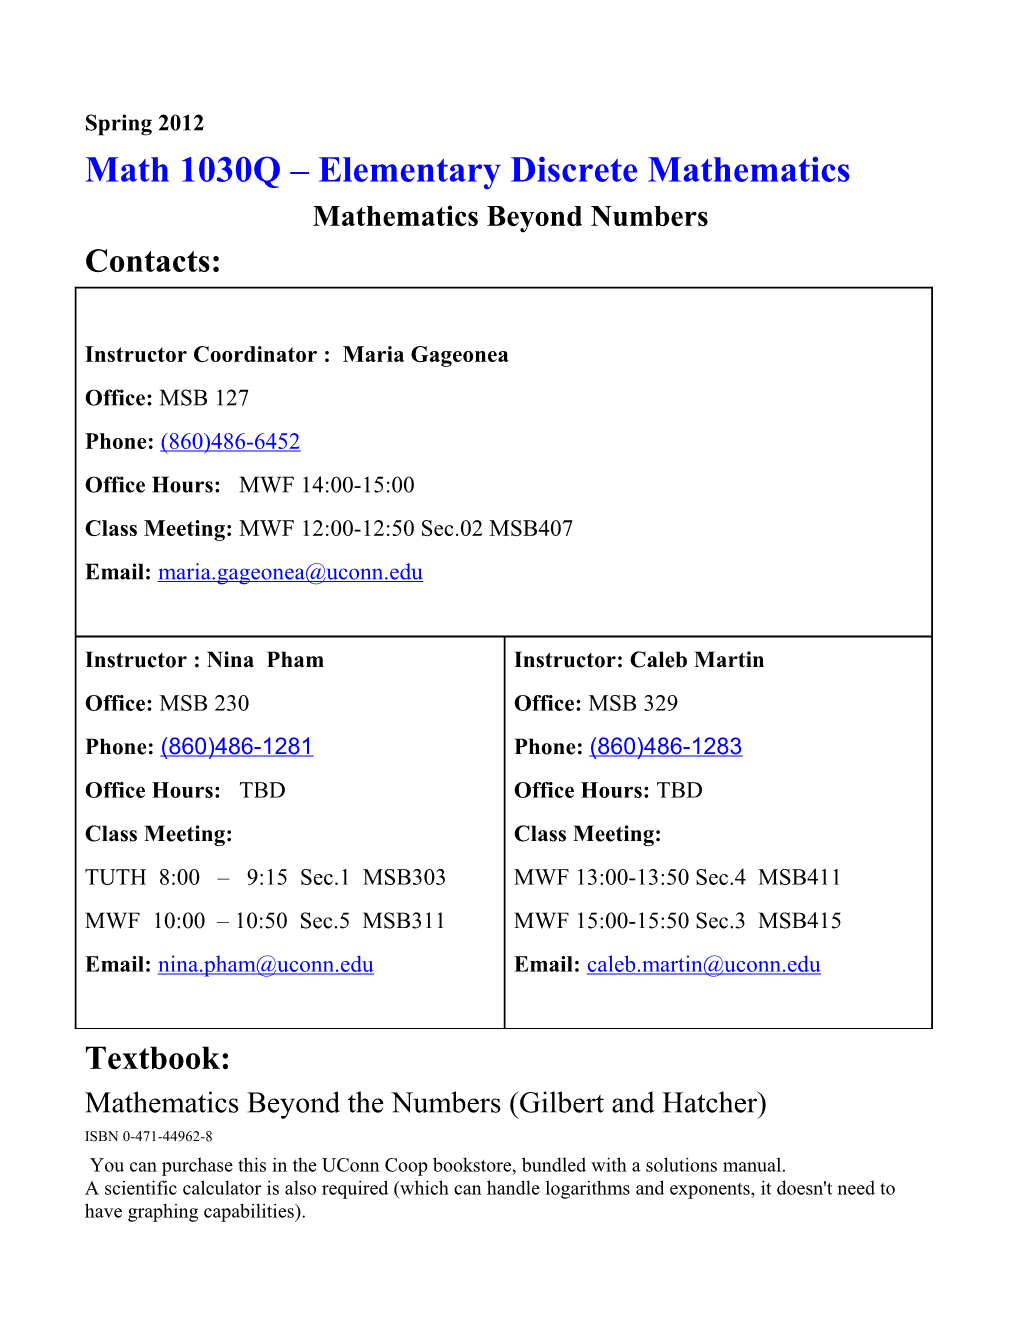 Math 1030Q Elementary Discrete Mathematics